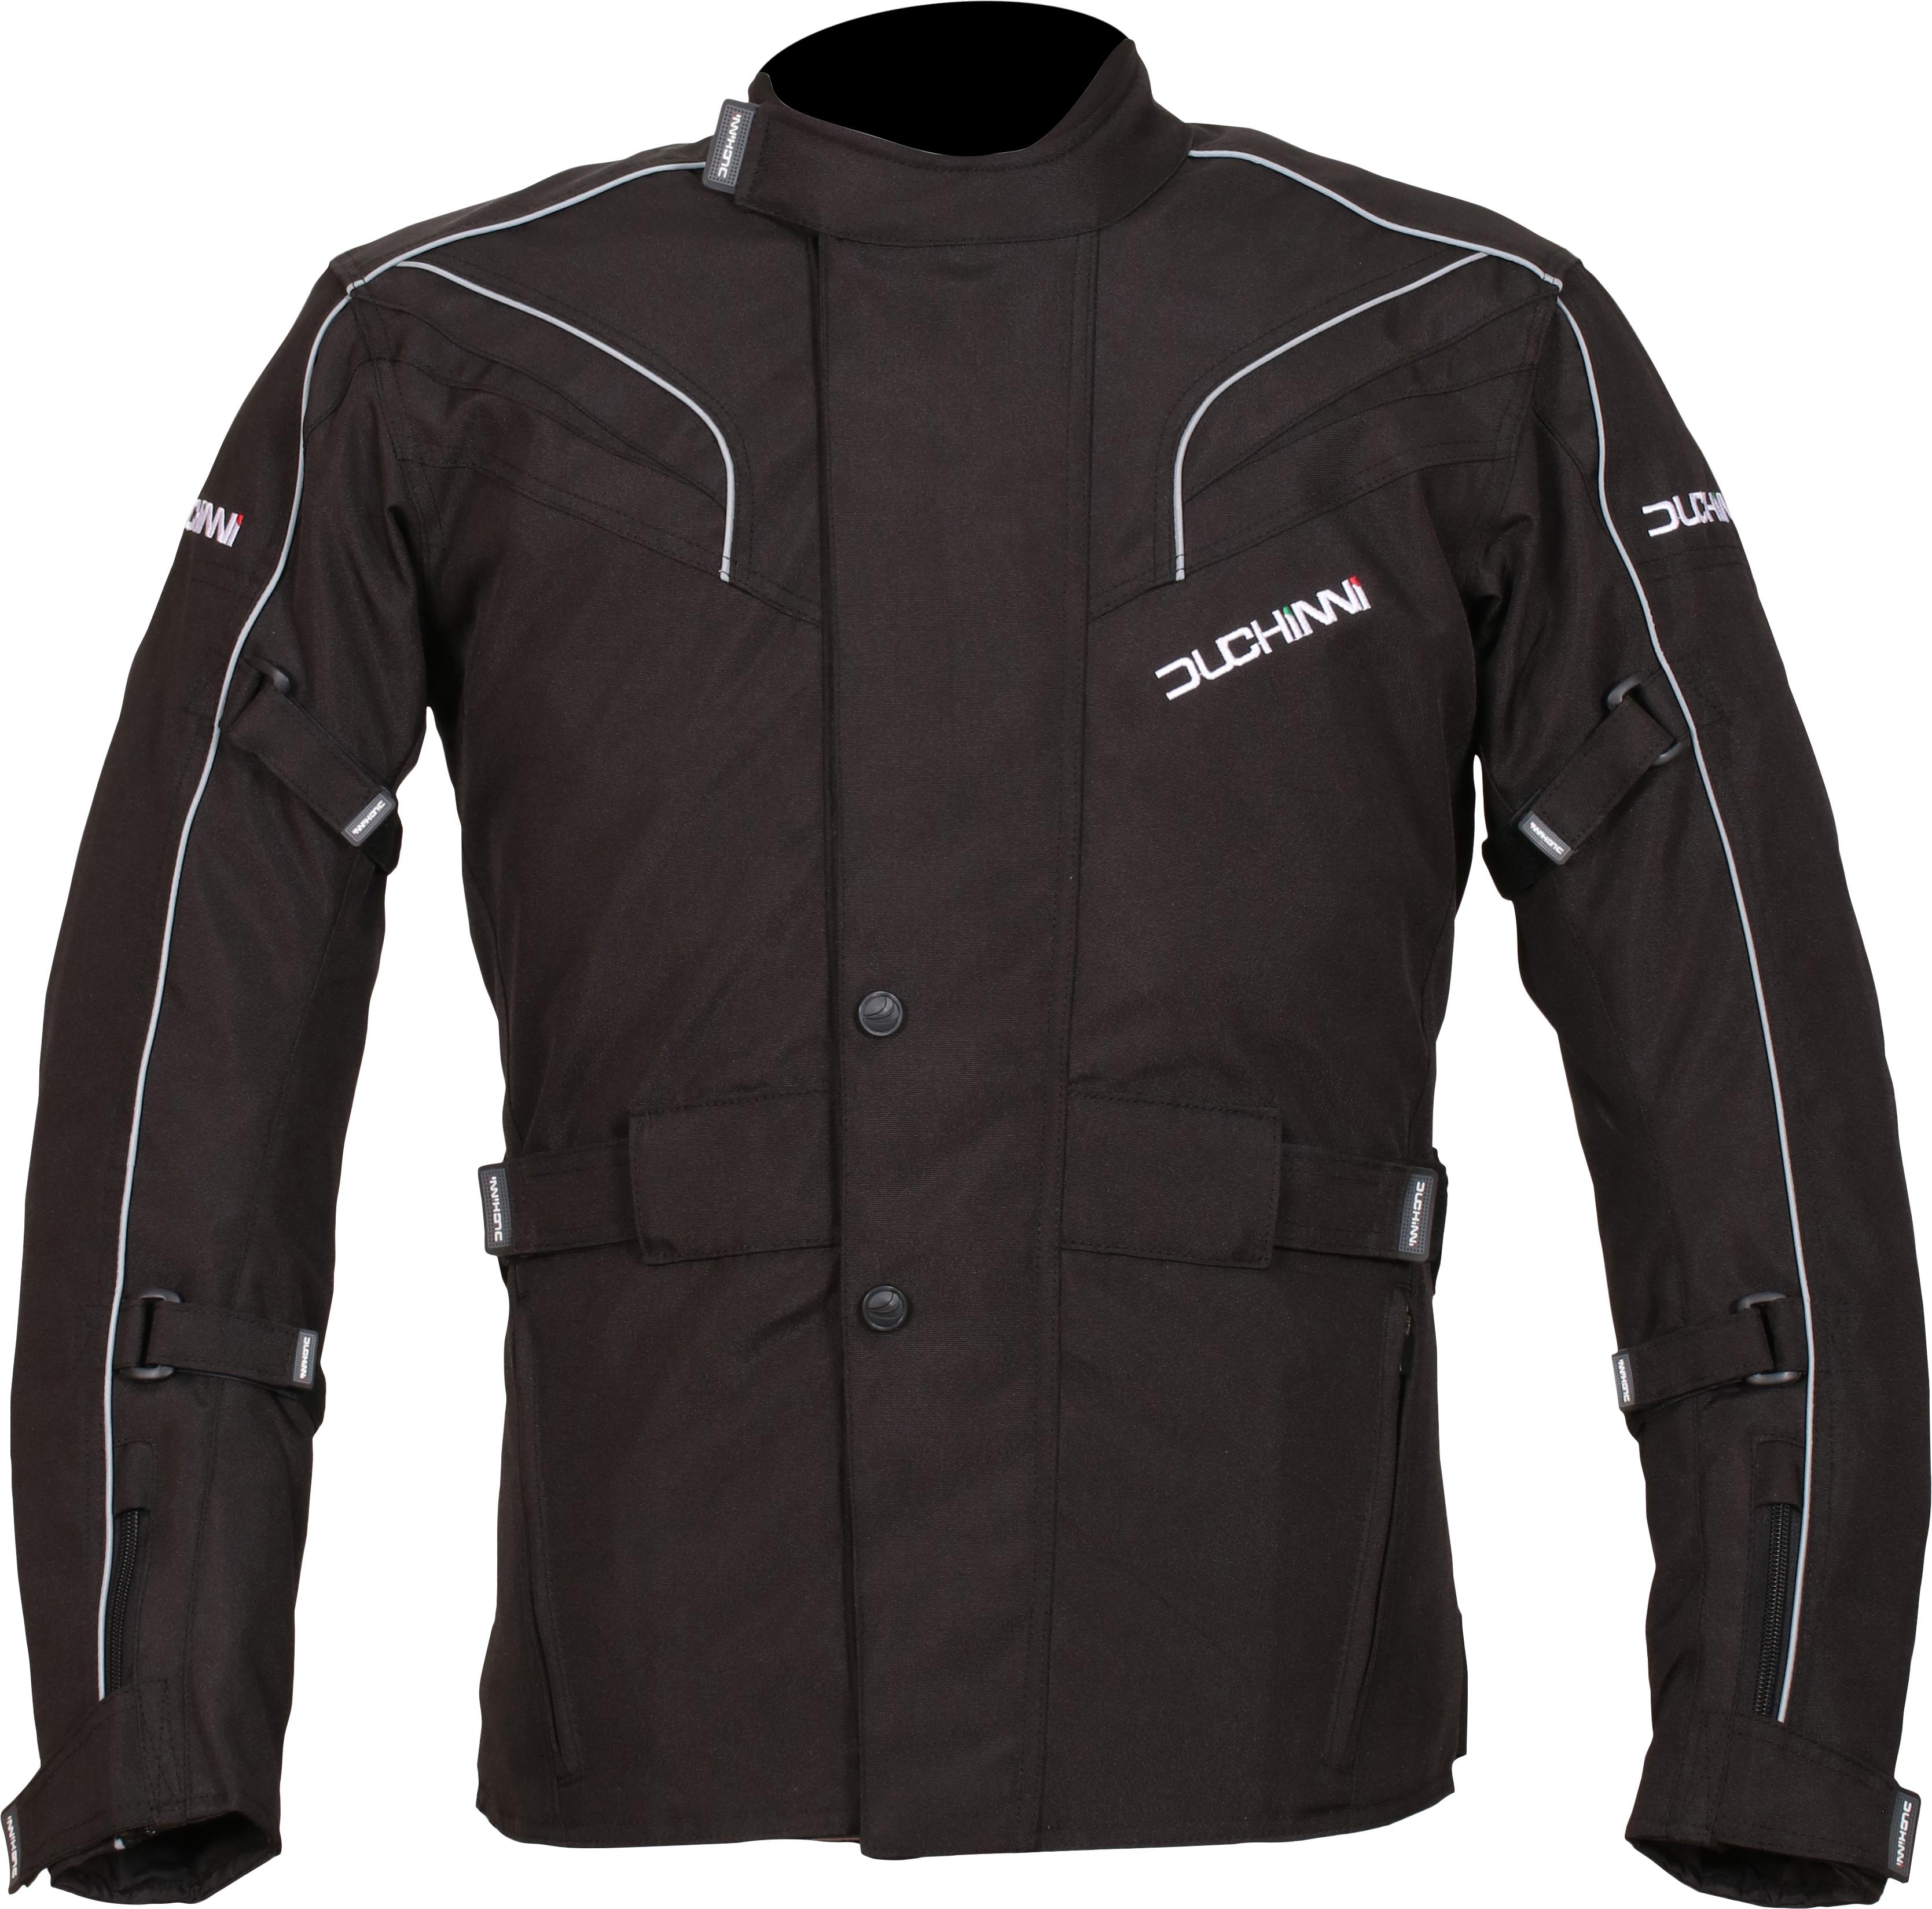 Duchinni Hurricane Motorcycle Jacket - Black, 6Xl